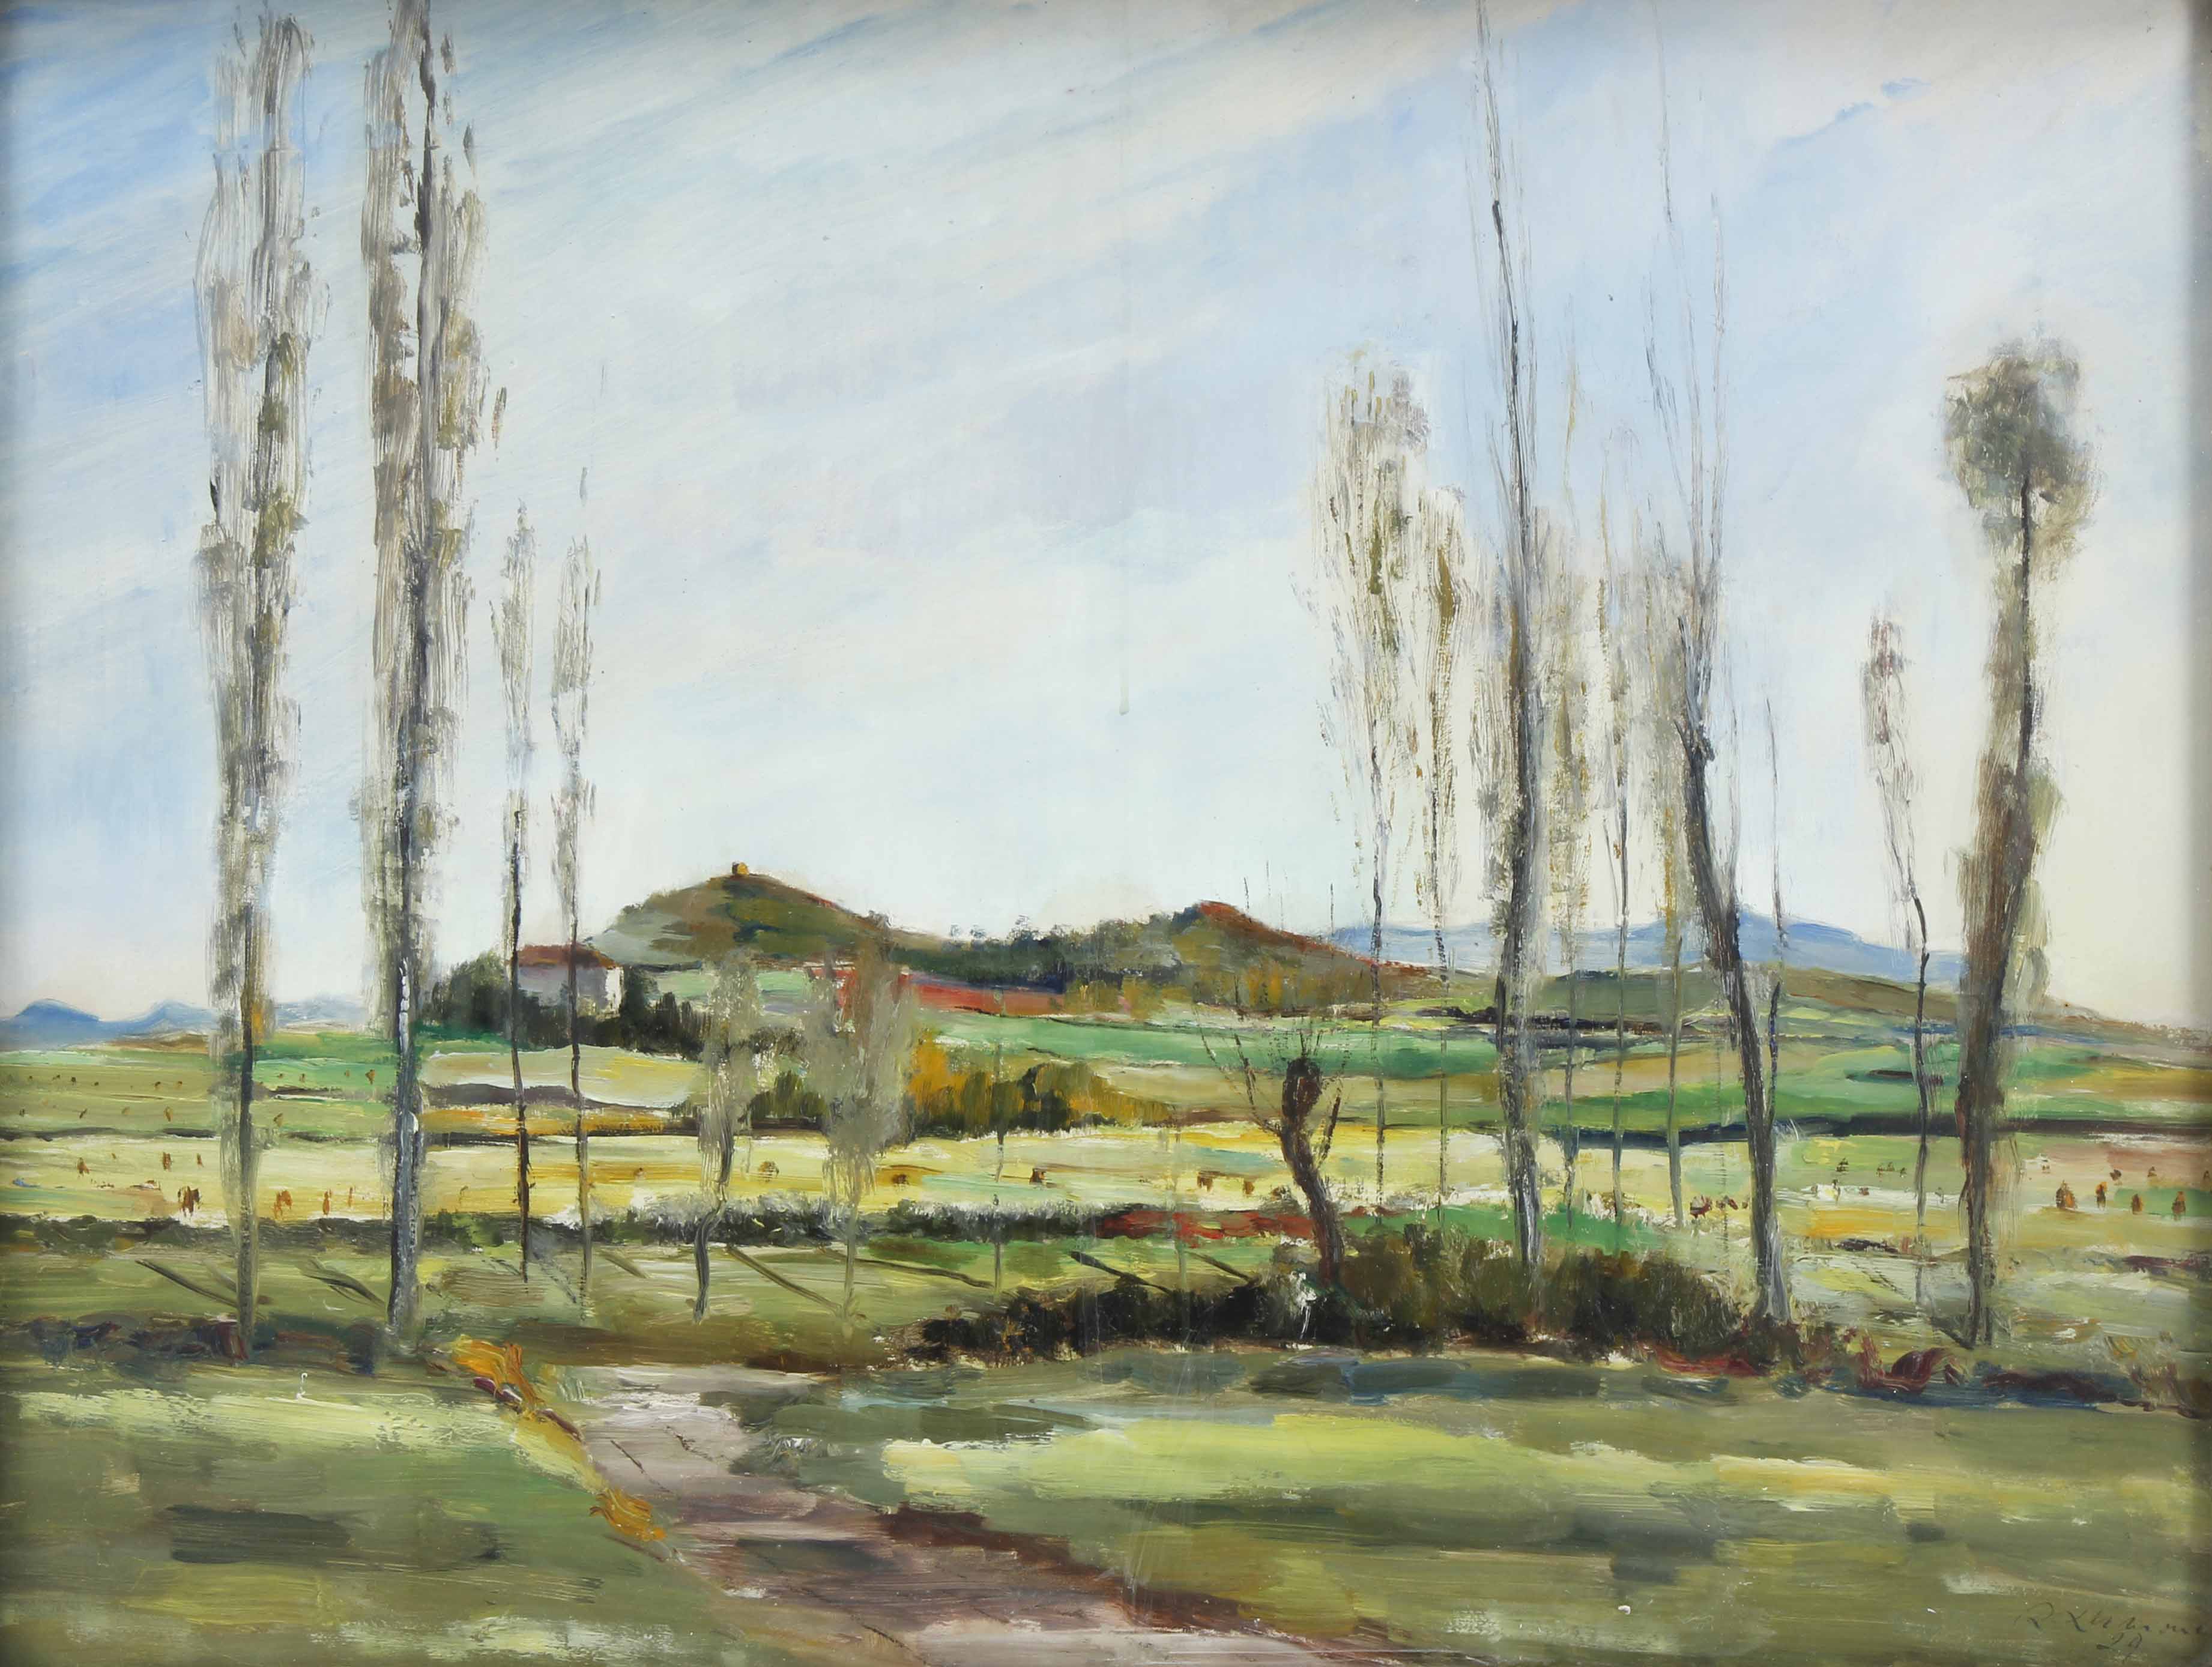 RAFAEL LLIMONA BENET (1896-1957). "PAISAJE", 1929.